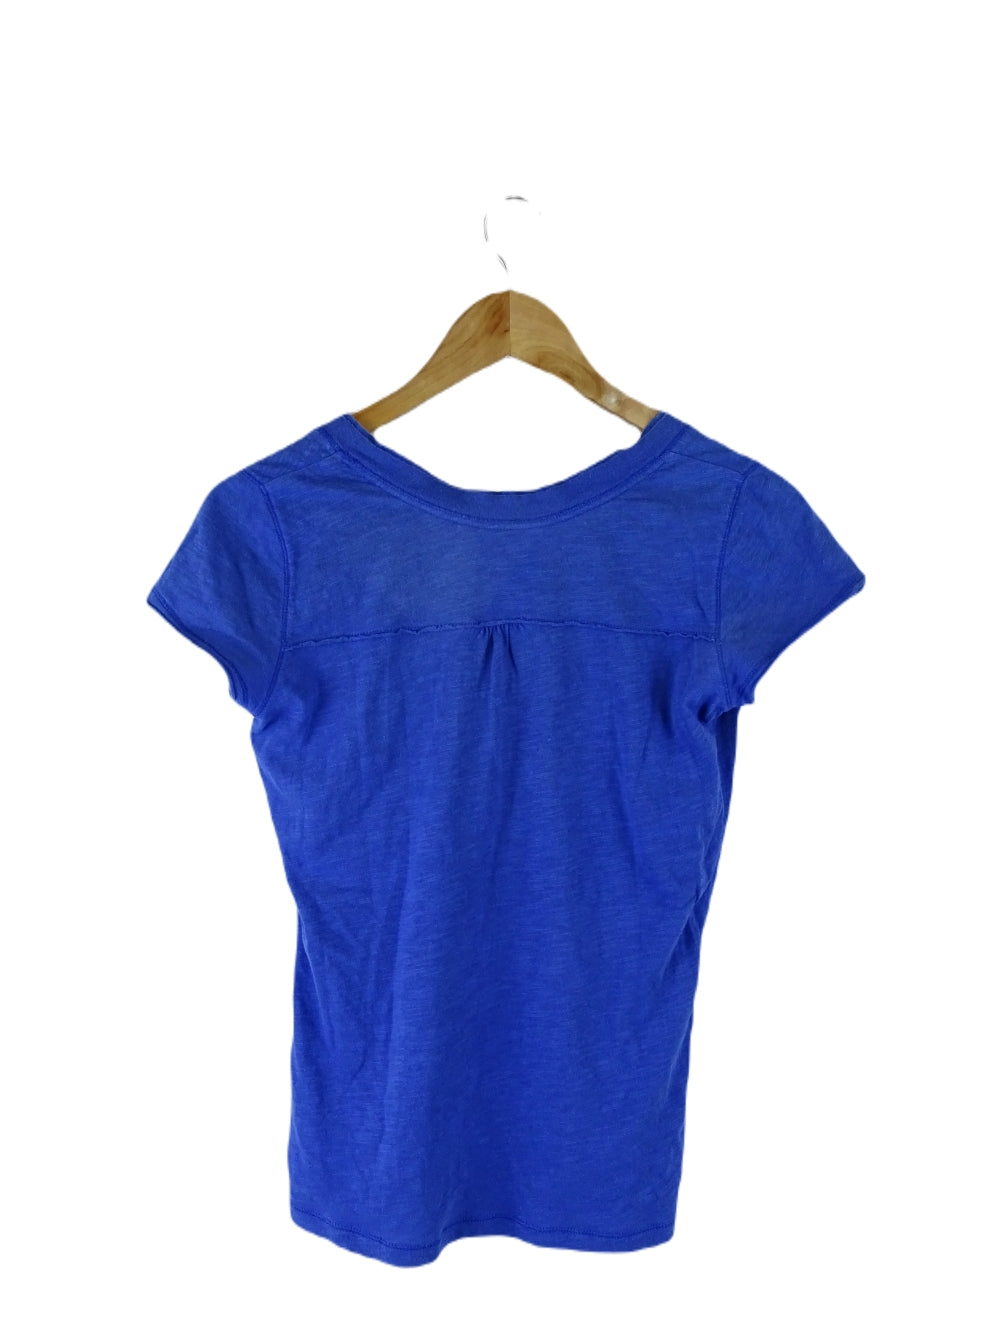 Lorna Jane Blue T-shirt S